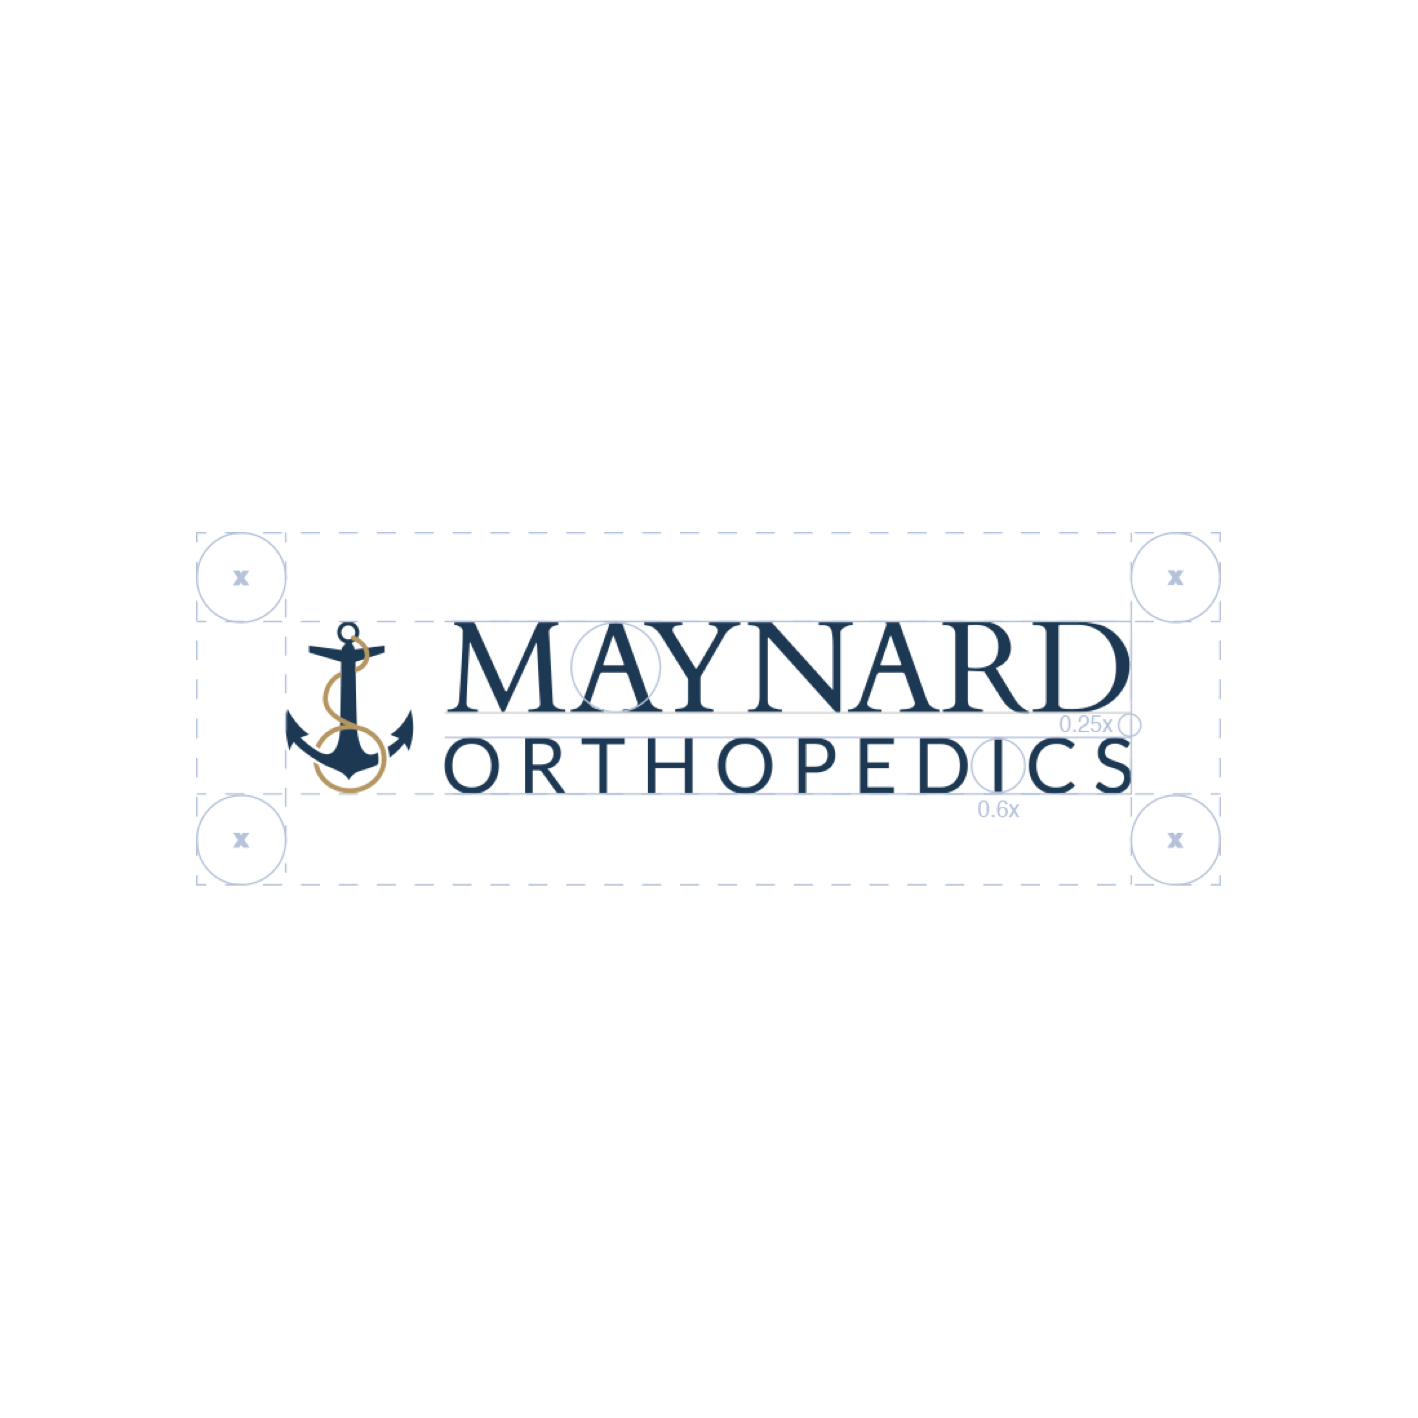 Maynard Orthopedics Brand Logo - Text